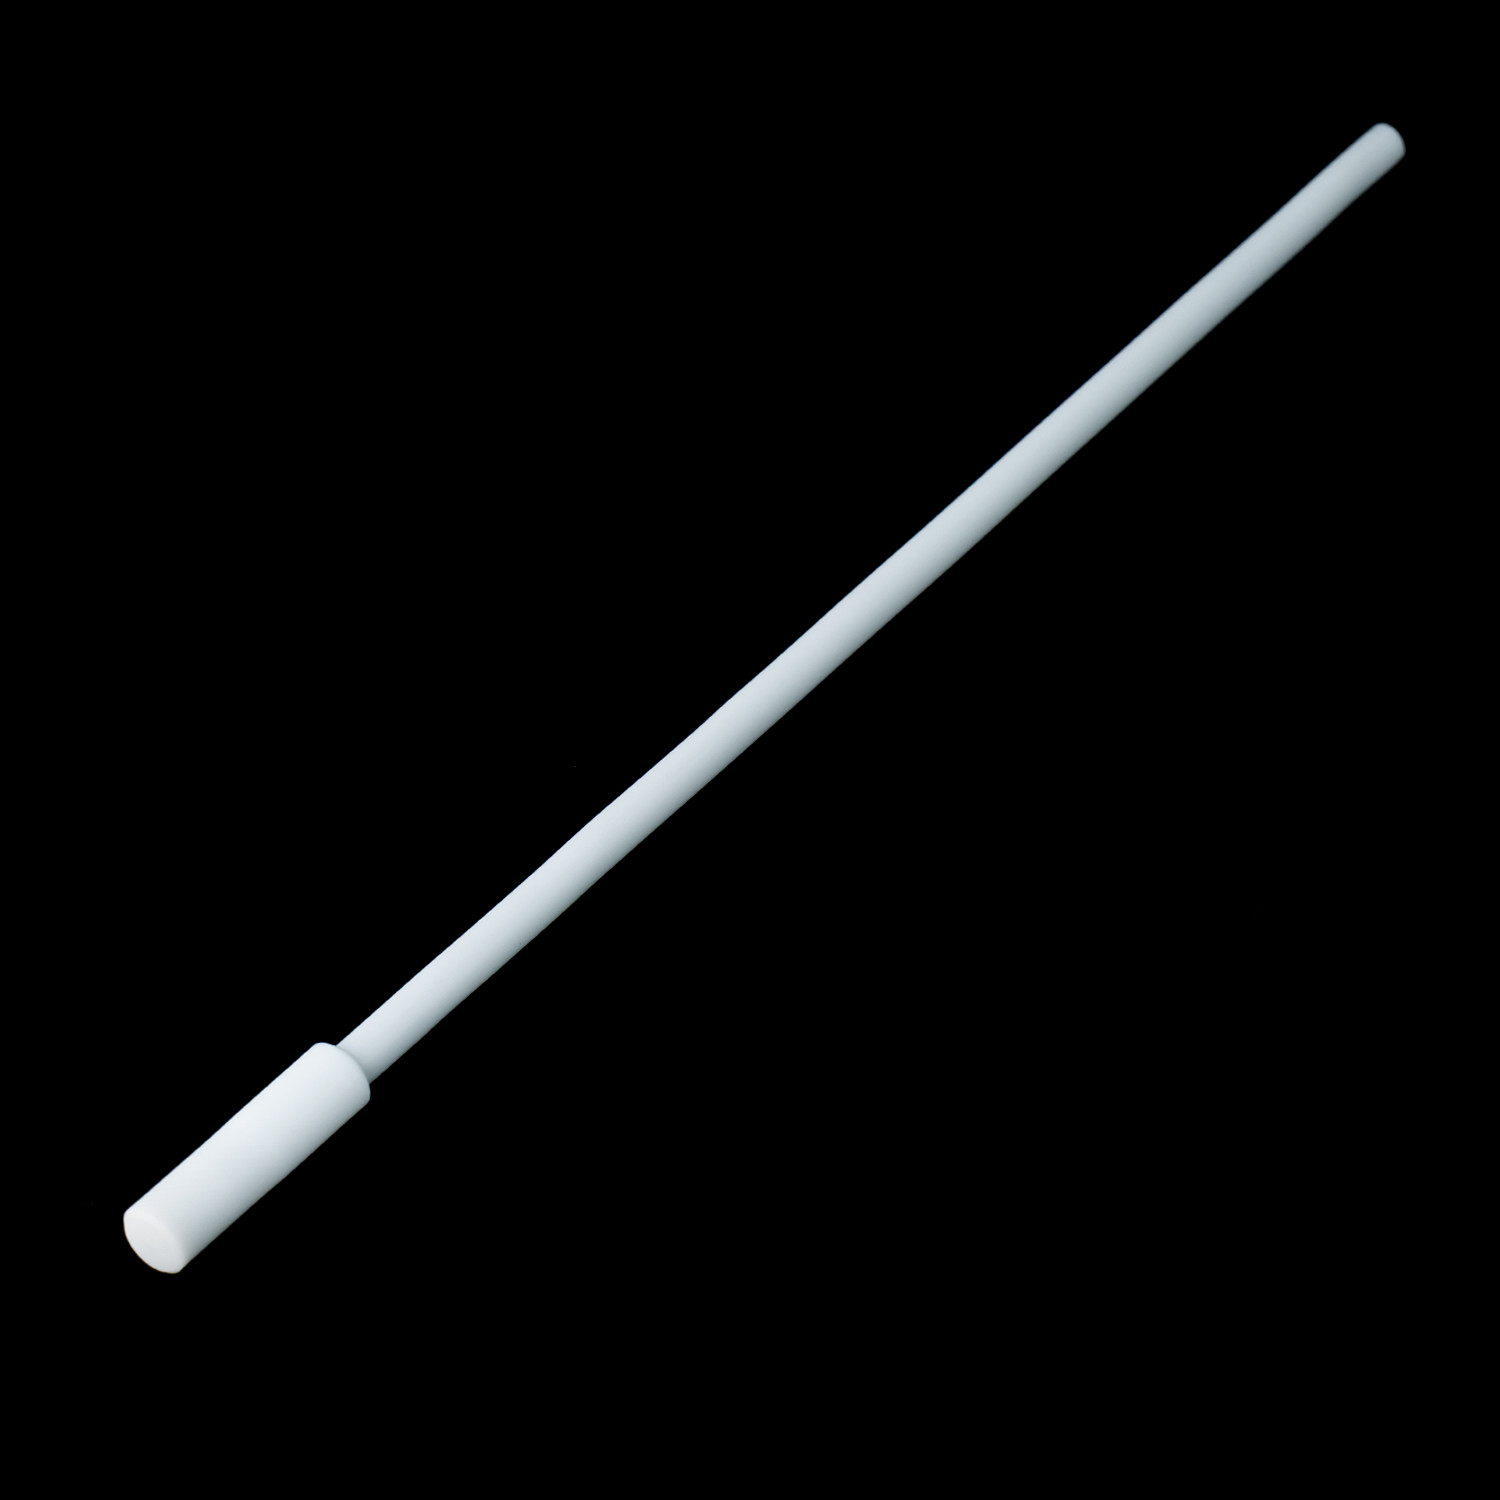 Magnetic rod for retrieval of stir bars (fleas)